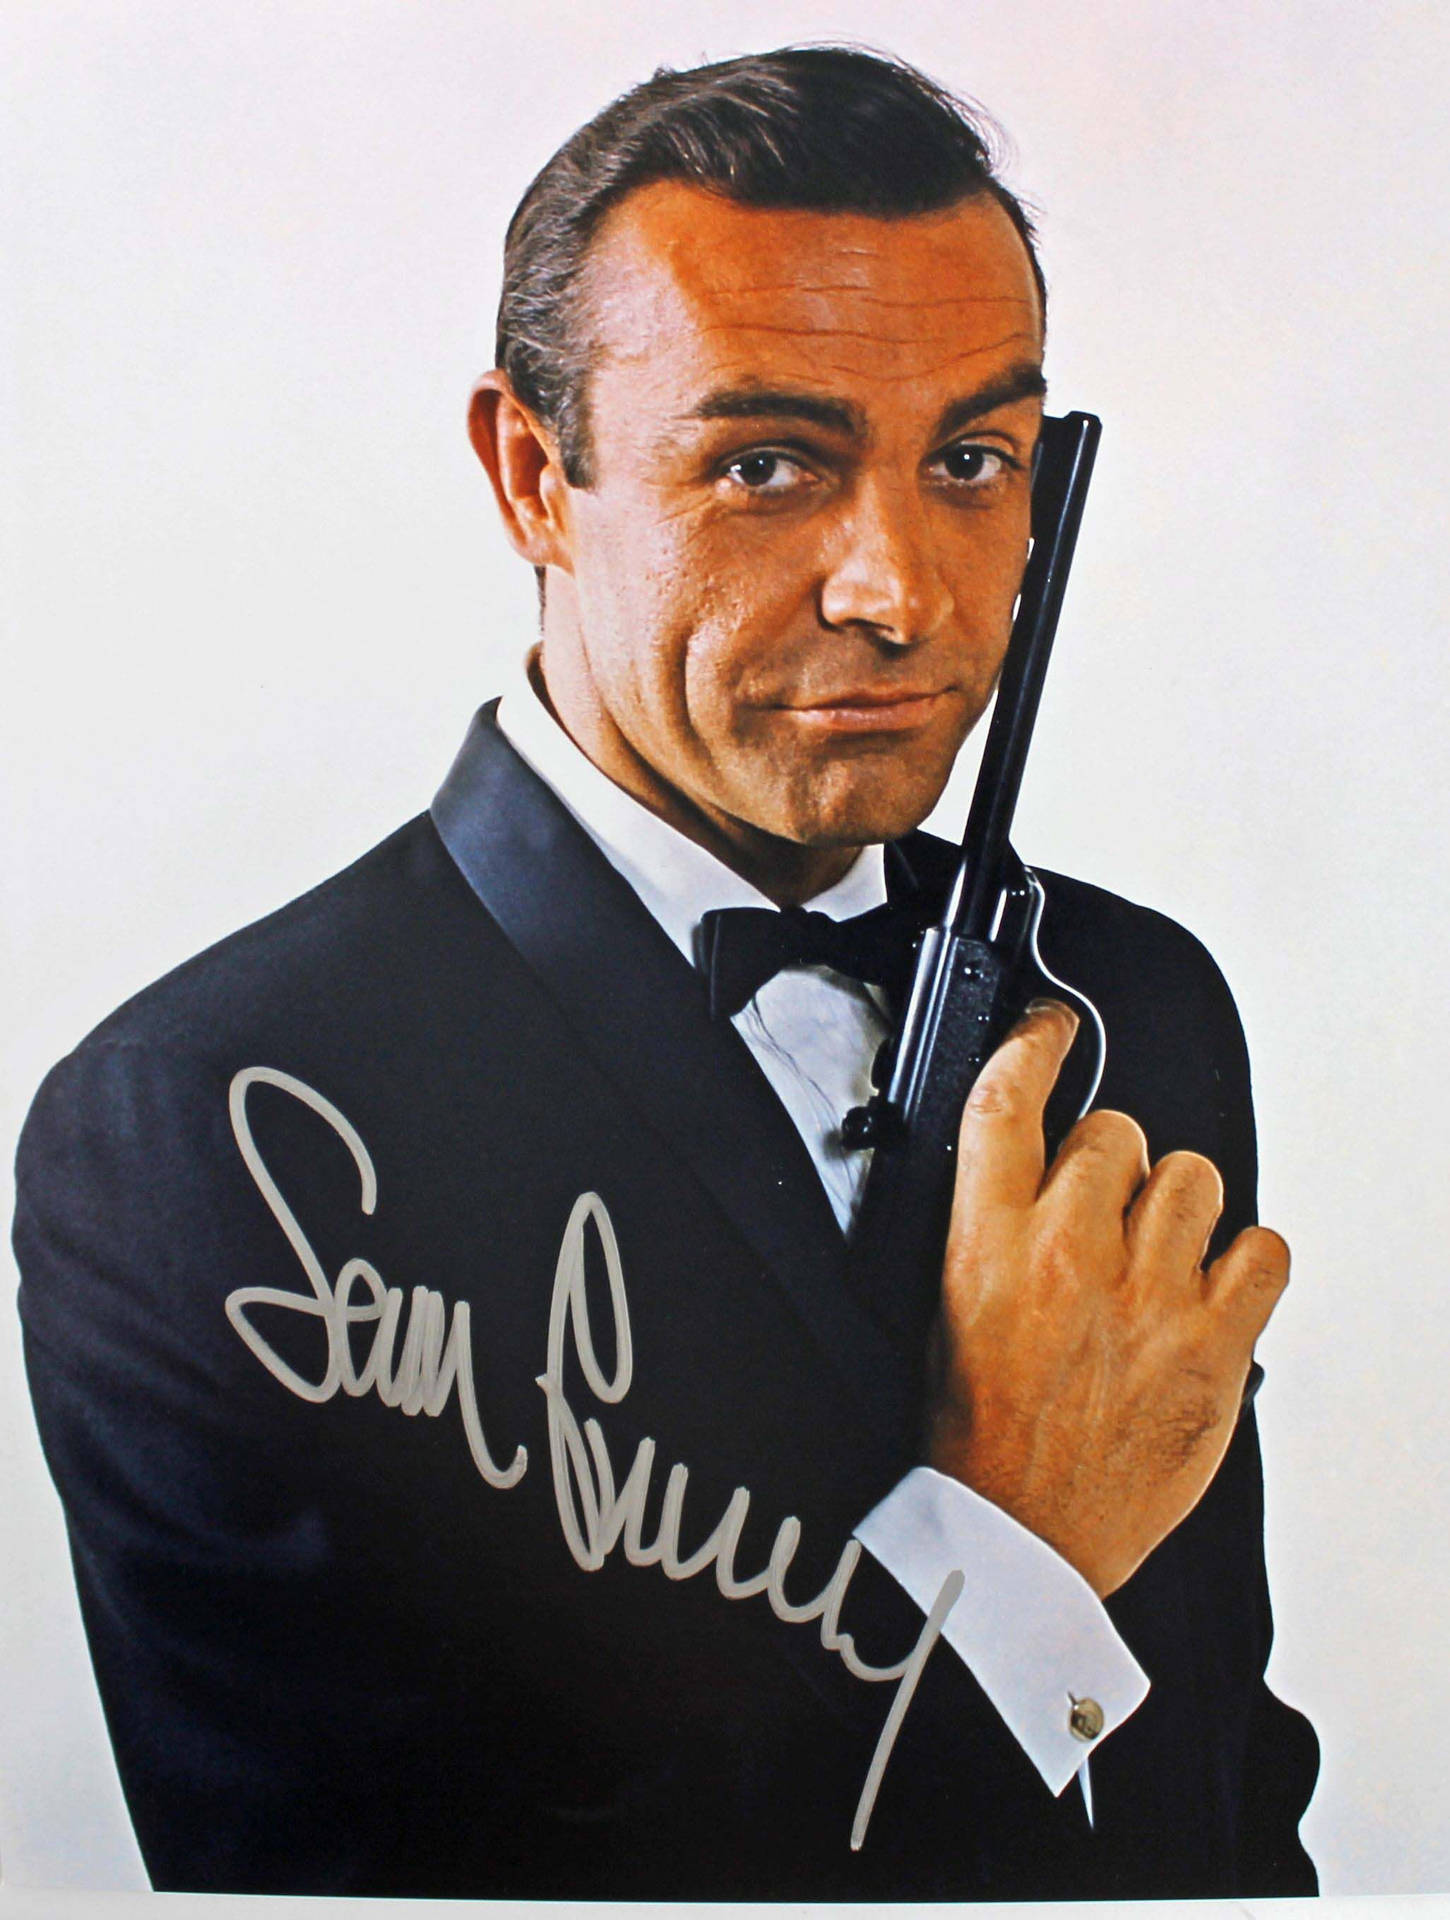 Sean Connery With Handgun Wallpaper